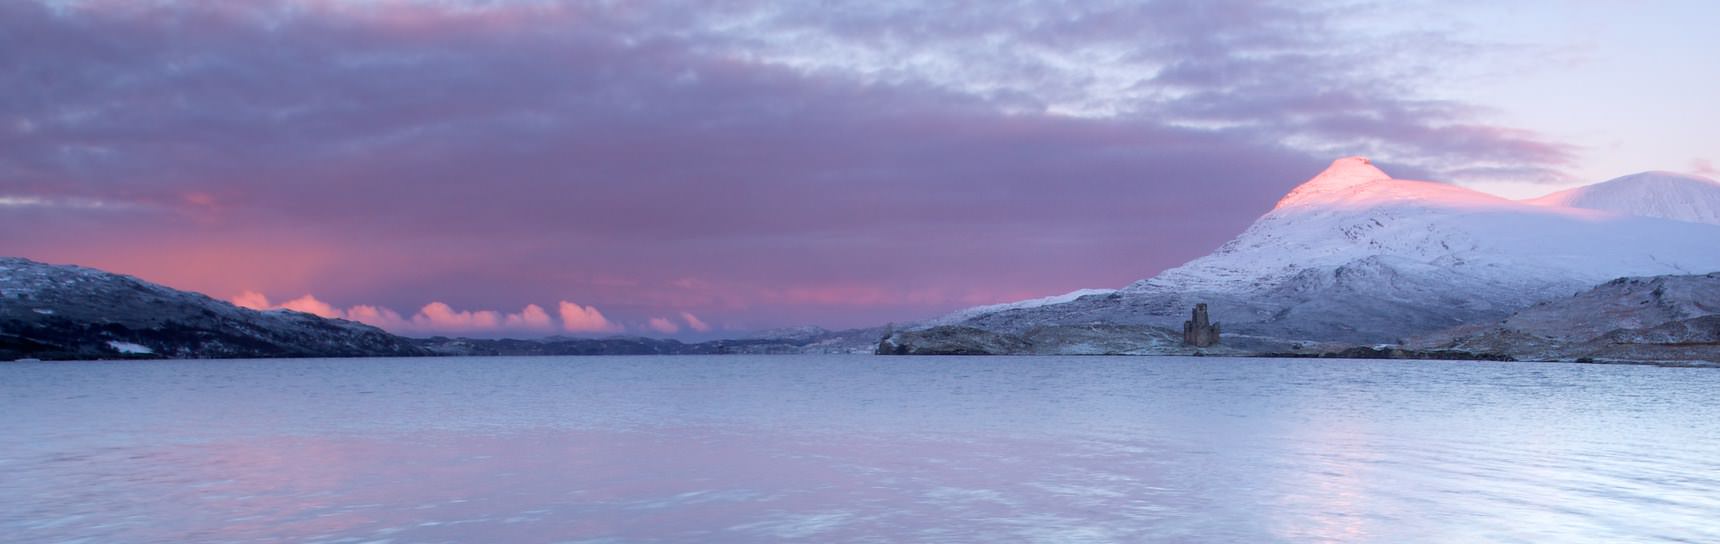 Sunrise over Loch Assynt